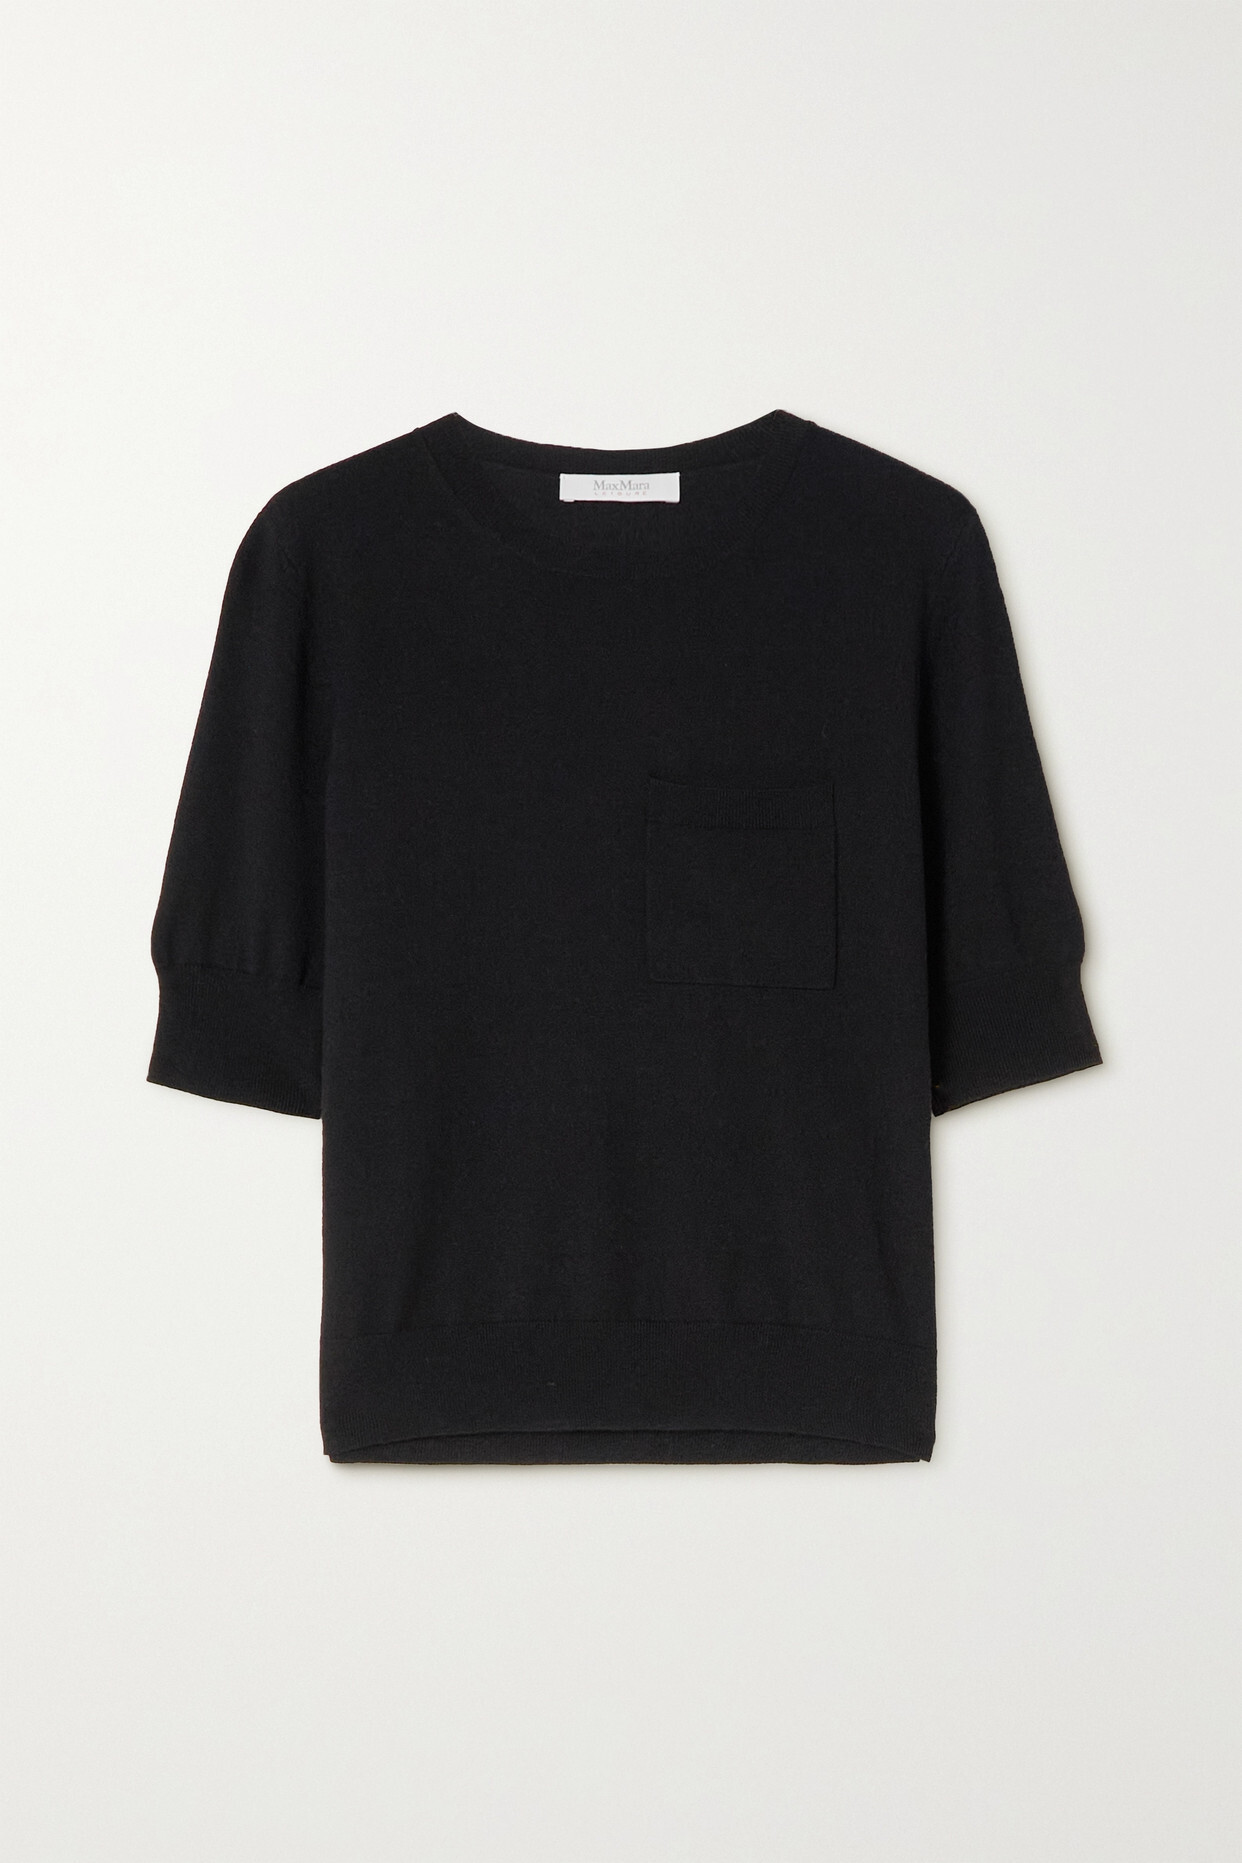 Max Mara - Ortisei Knitted Sweater - Black